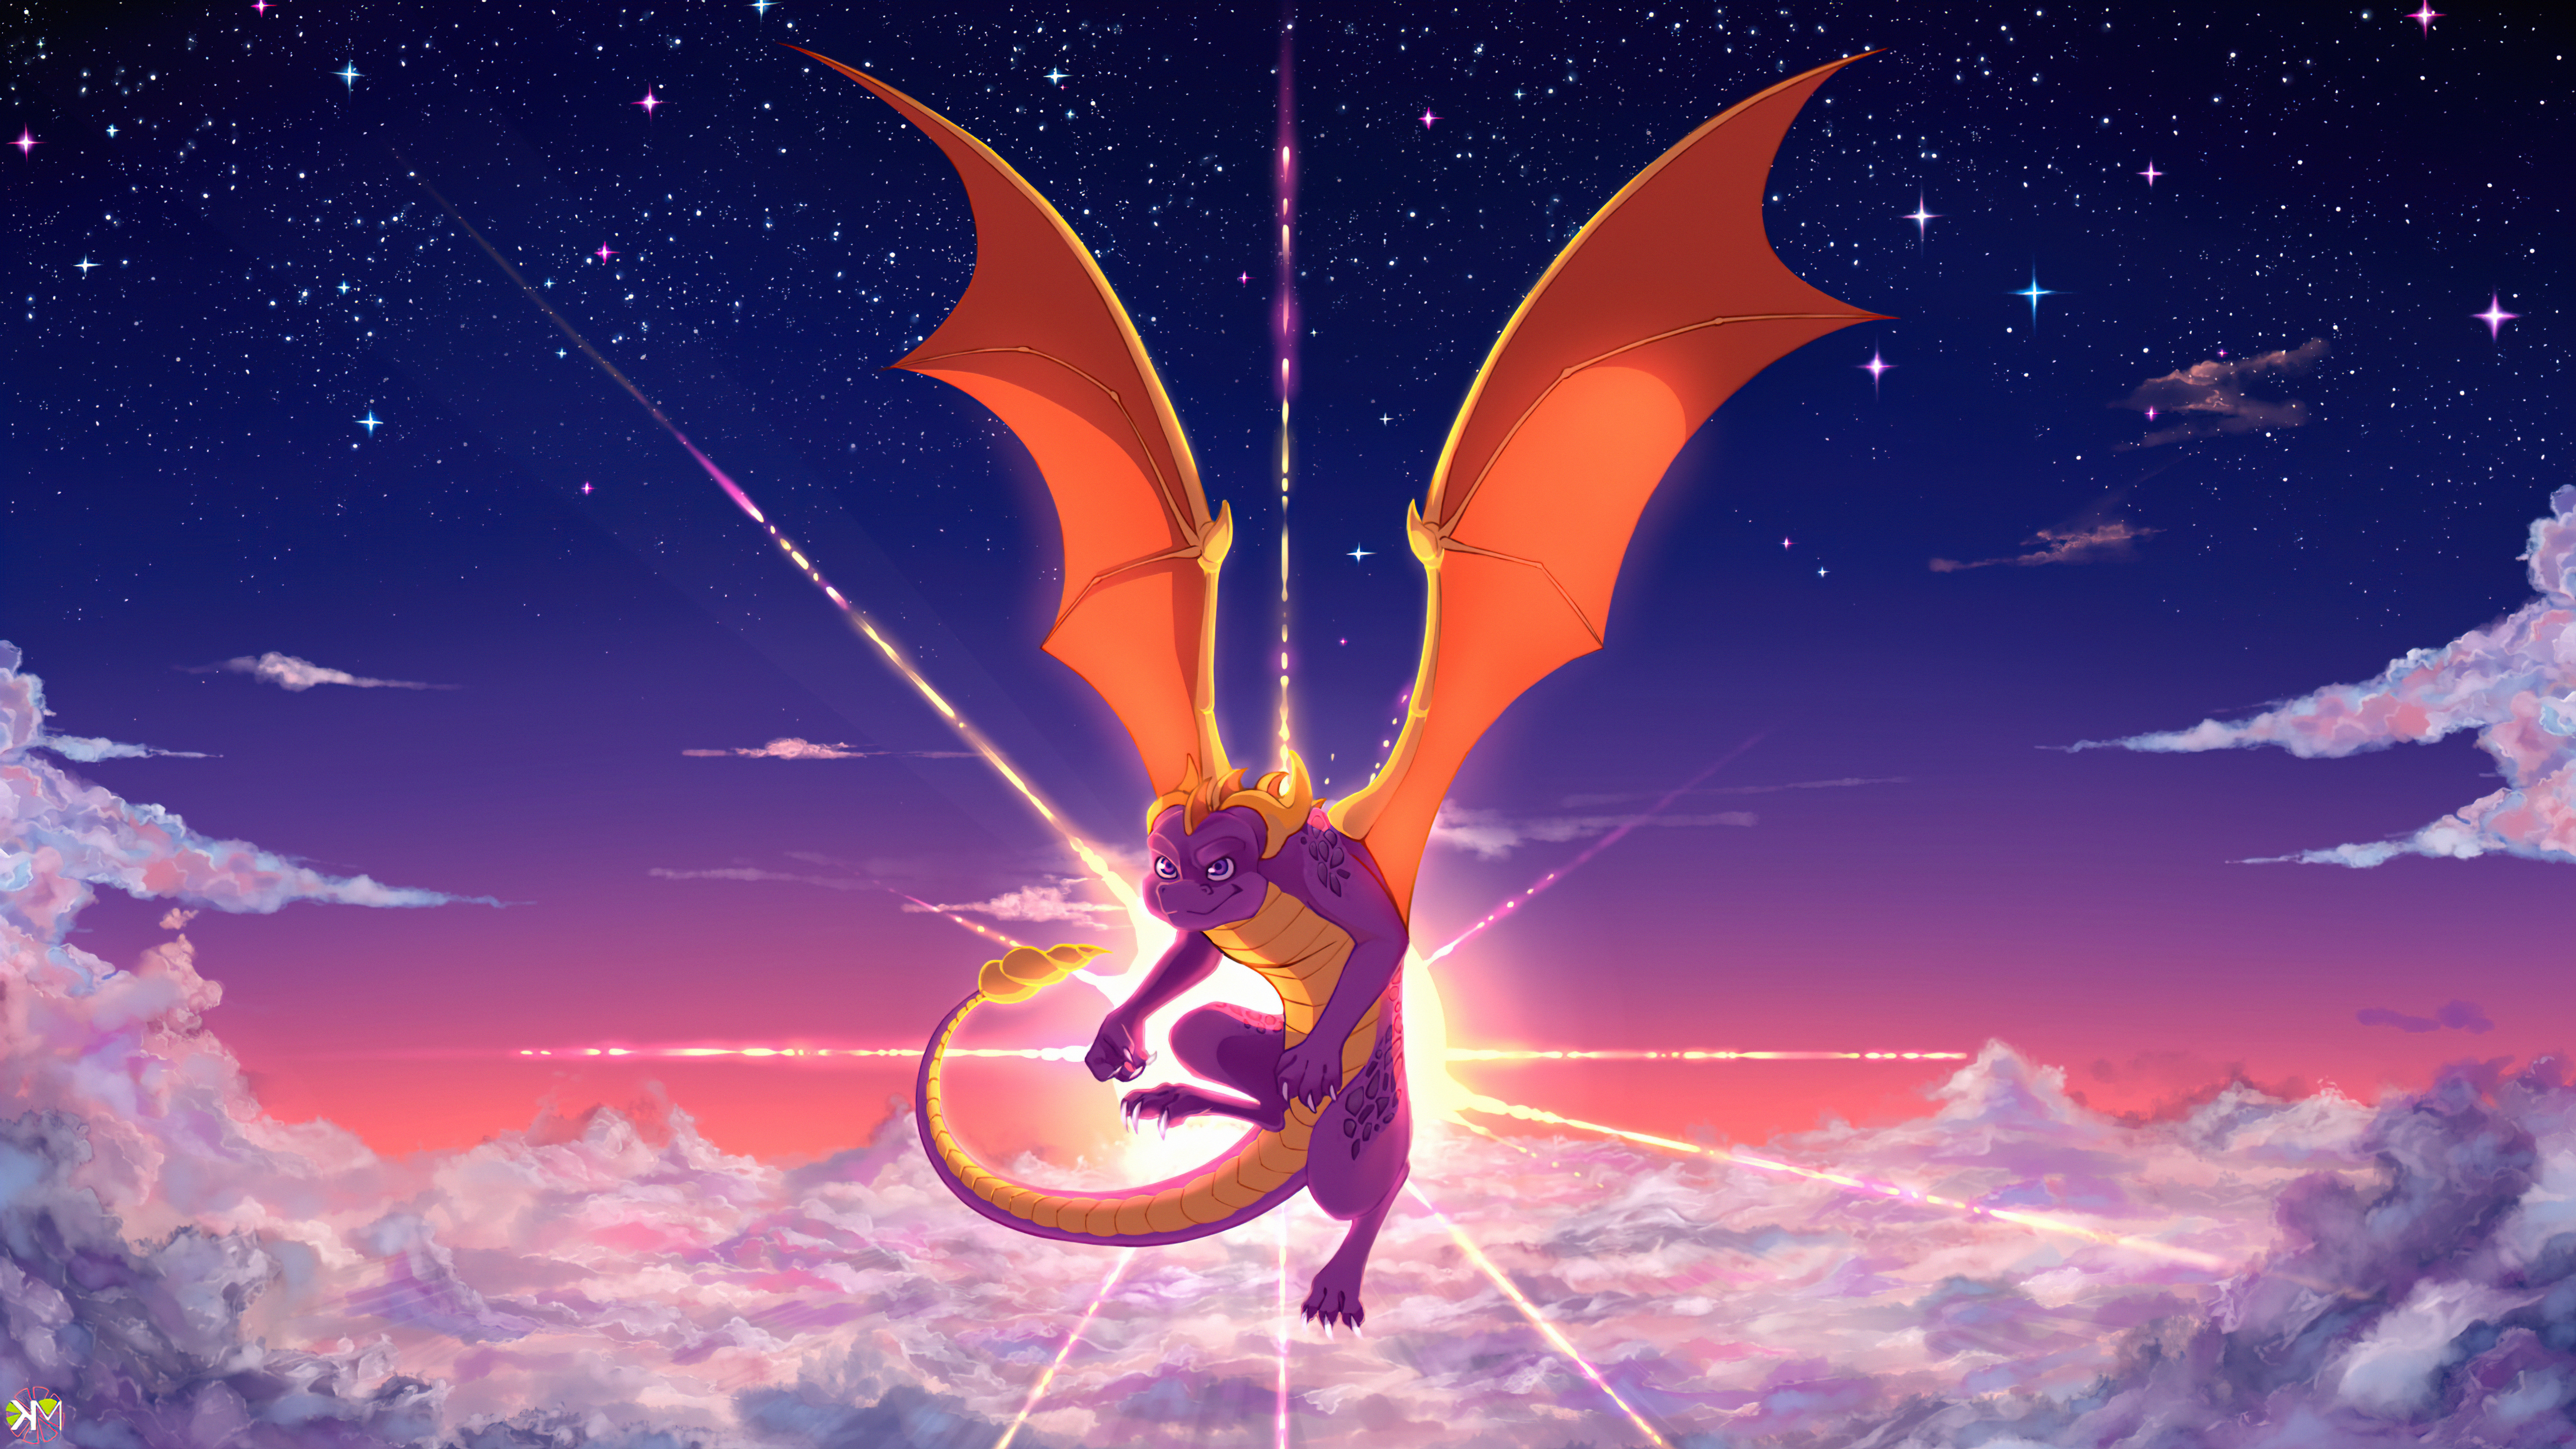 Spyro the Dragon 4k Ultra HD Wallpaper by coline EMANUEL